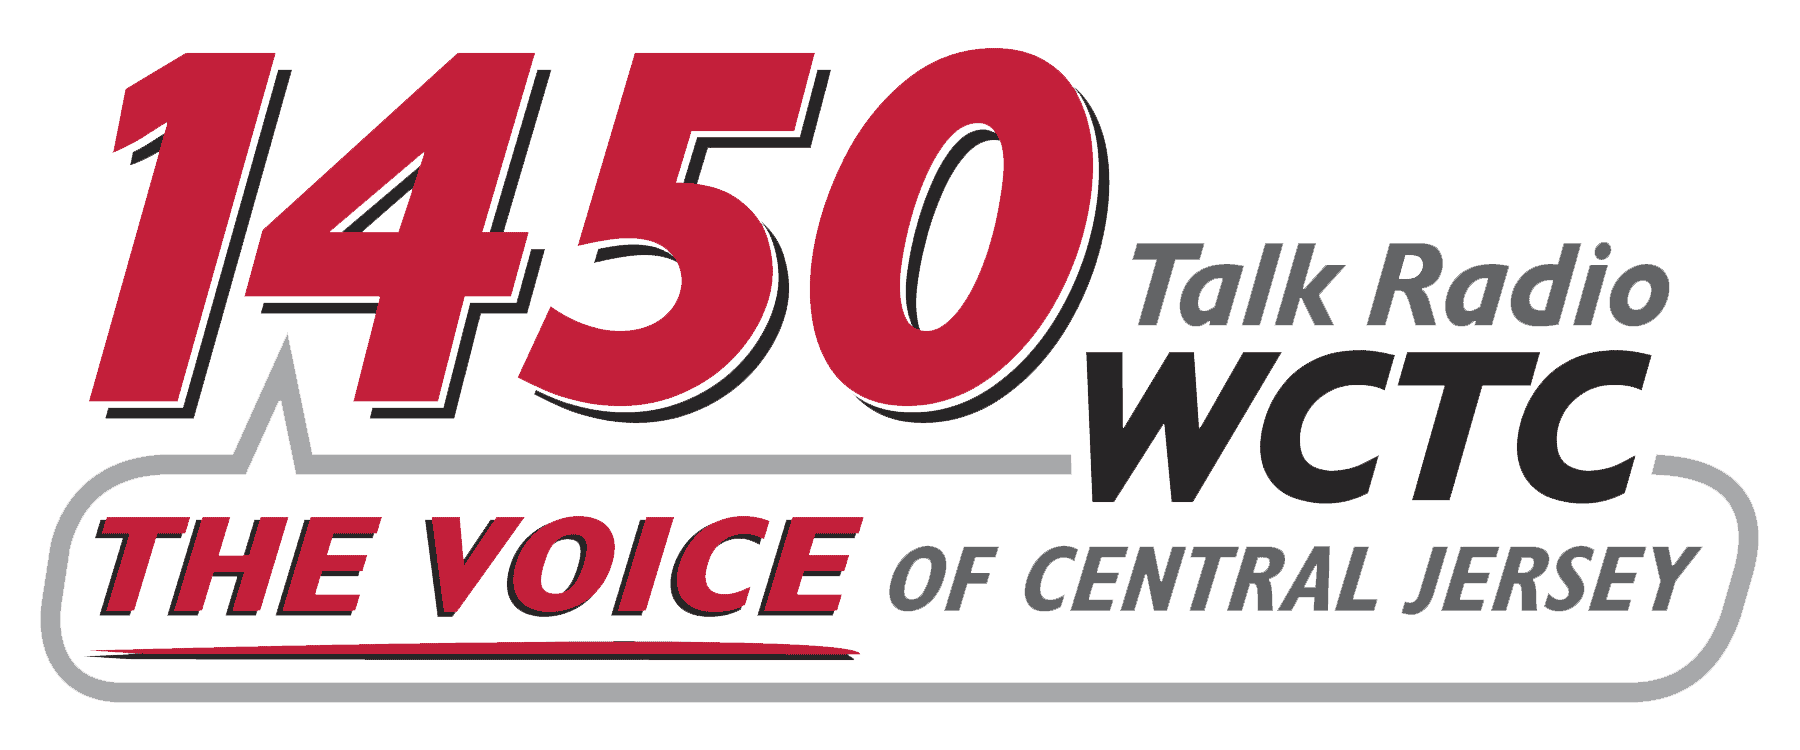 1450 WCTC Talk Radio